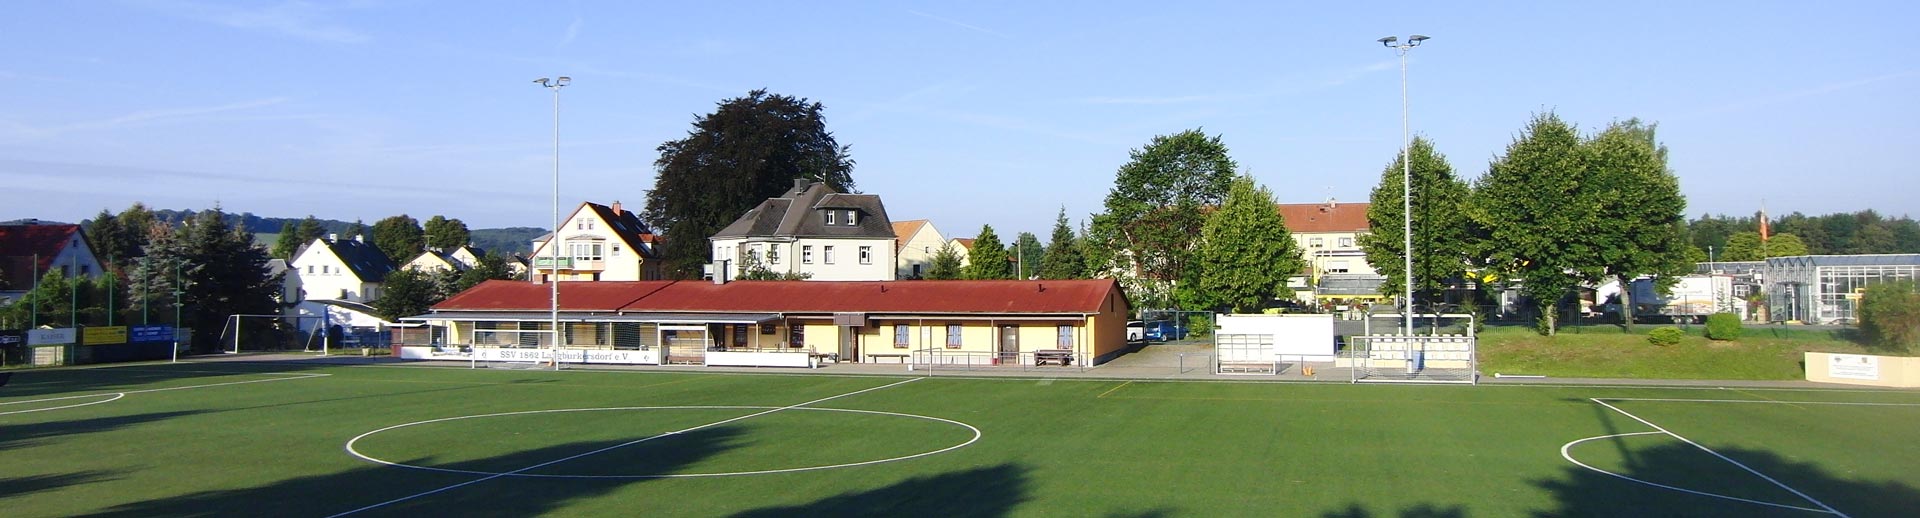 Sportplatz mit VereinsgebäudeMitglieder SSV 1862 Langburkersdorf e. V.